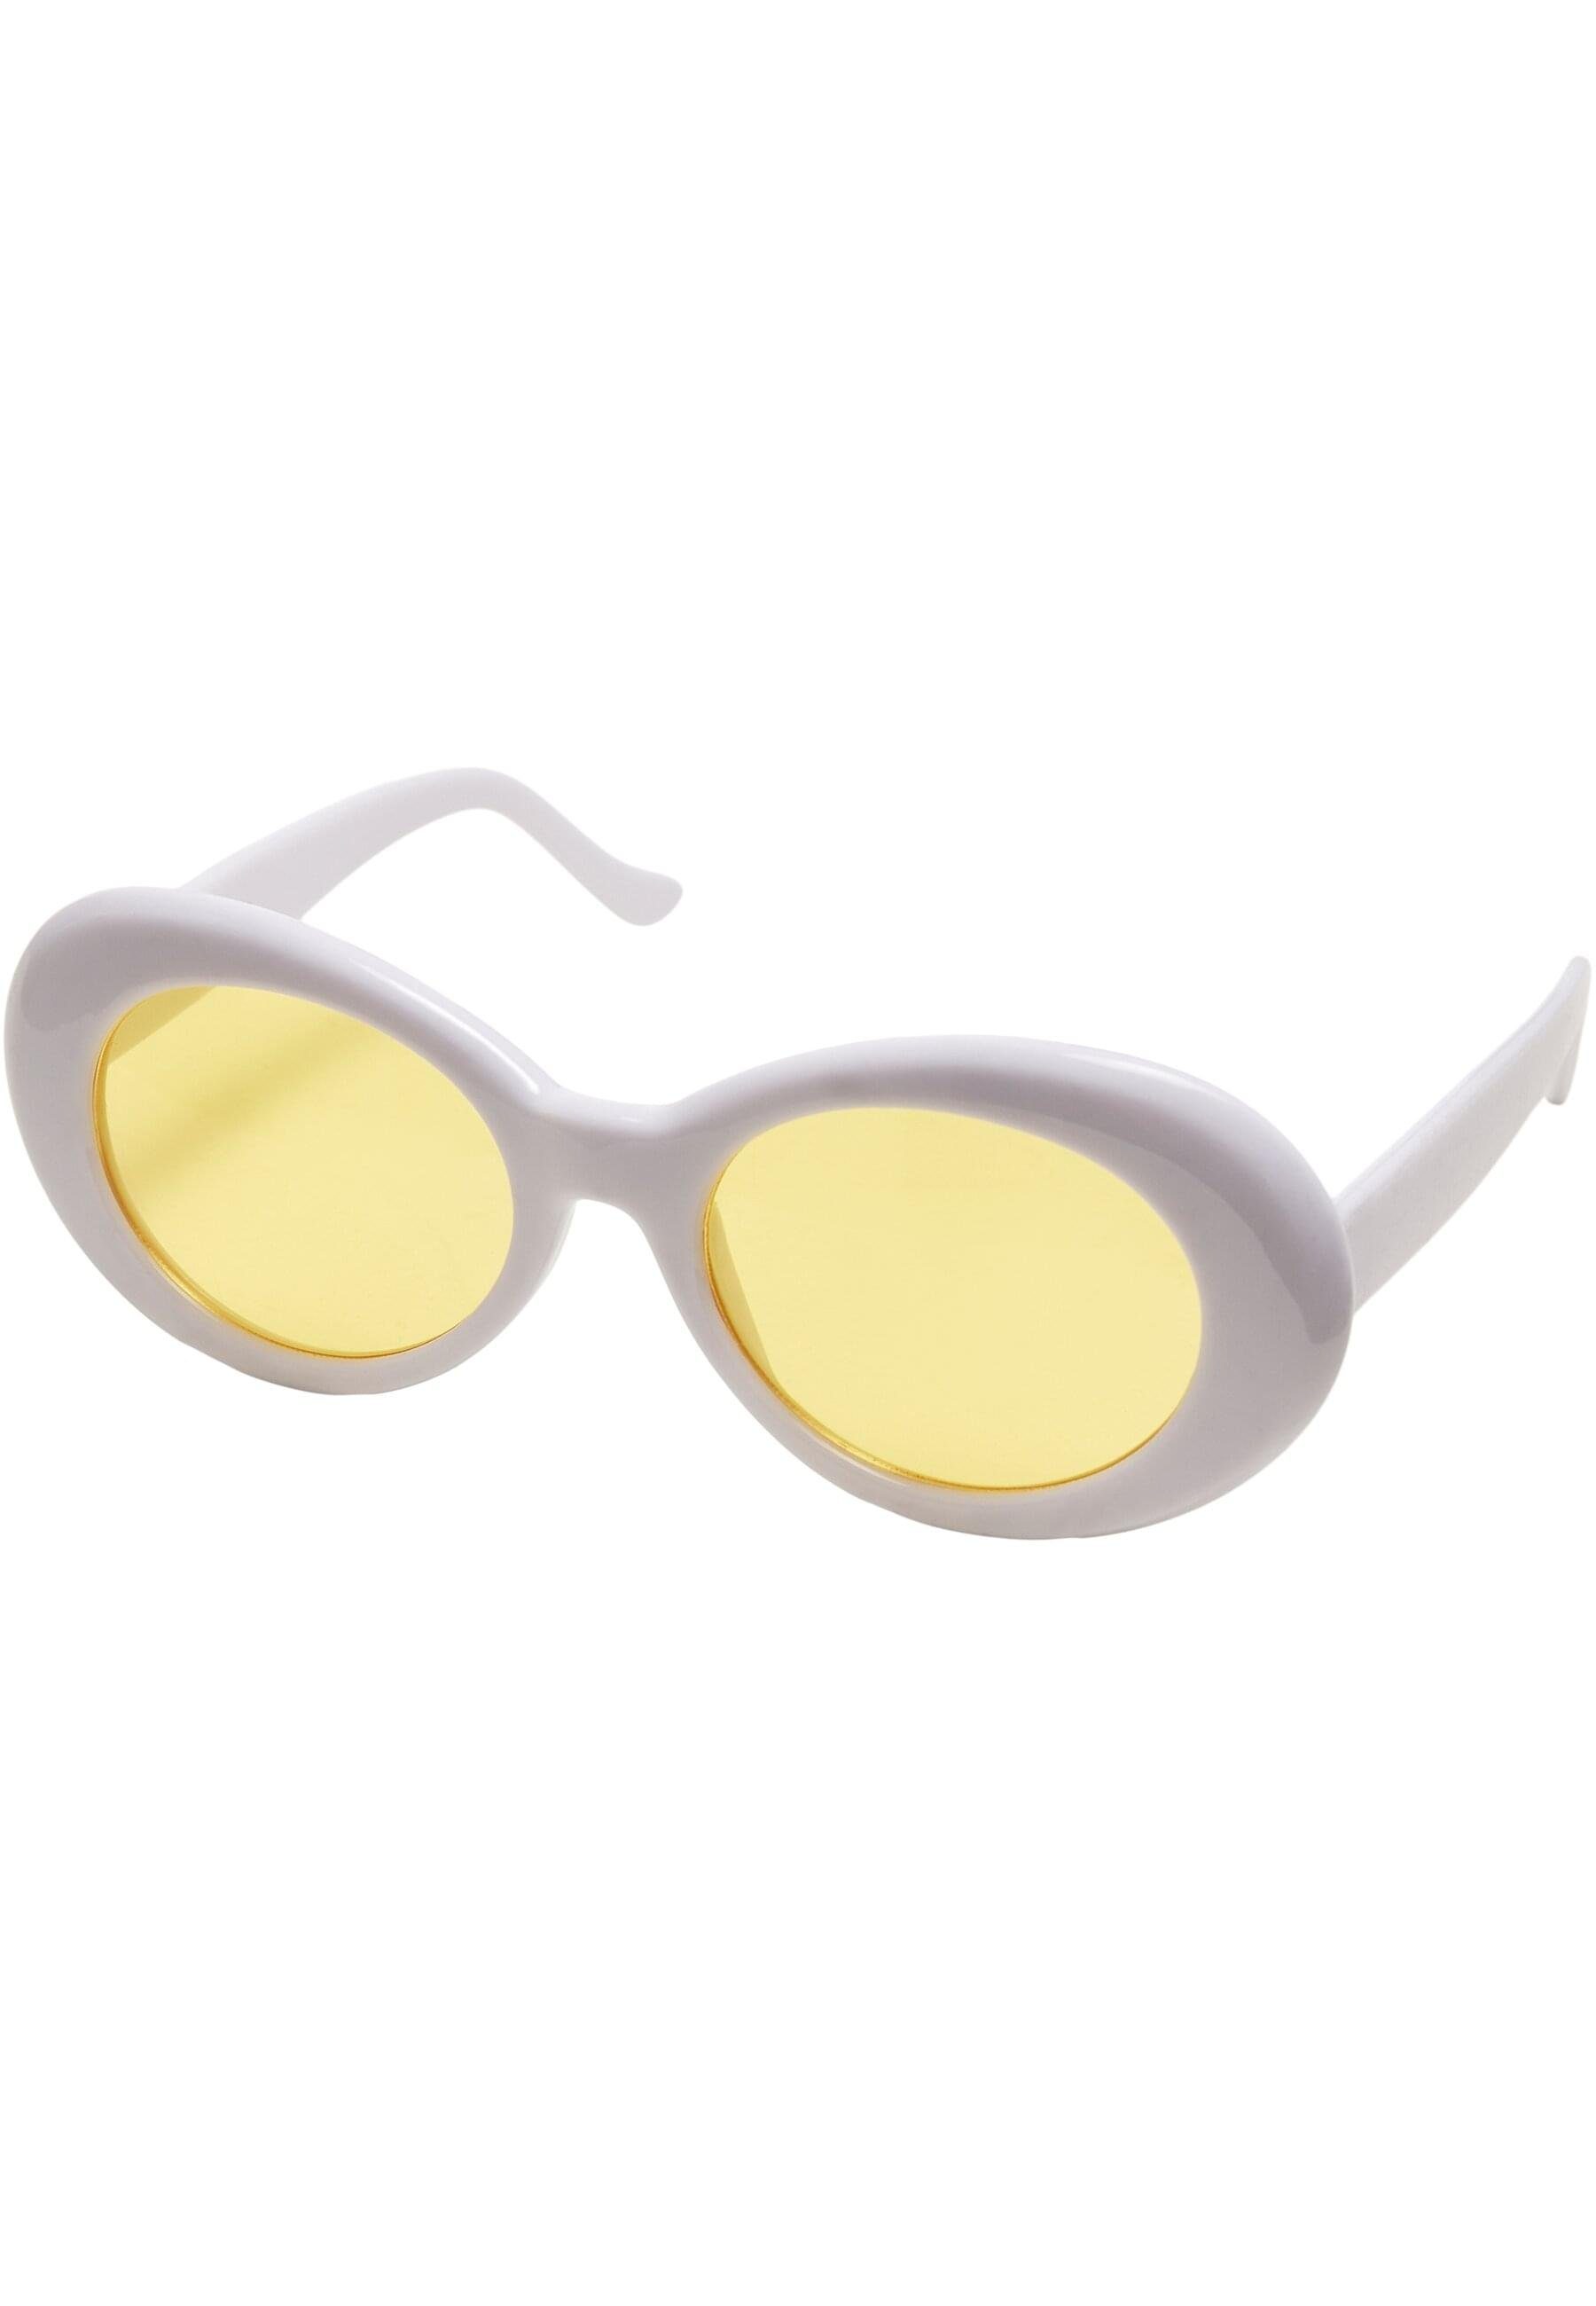 CLASSICS 2 TB2250 Sunglasses Tone wht/yel URBAN Unisex Tone Sonnenbrille 2